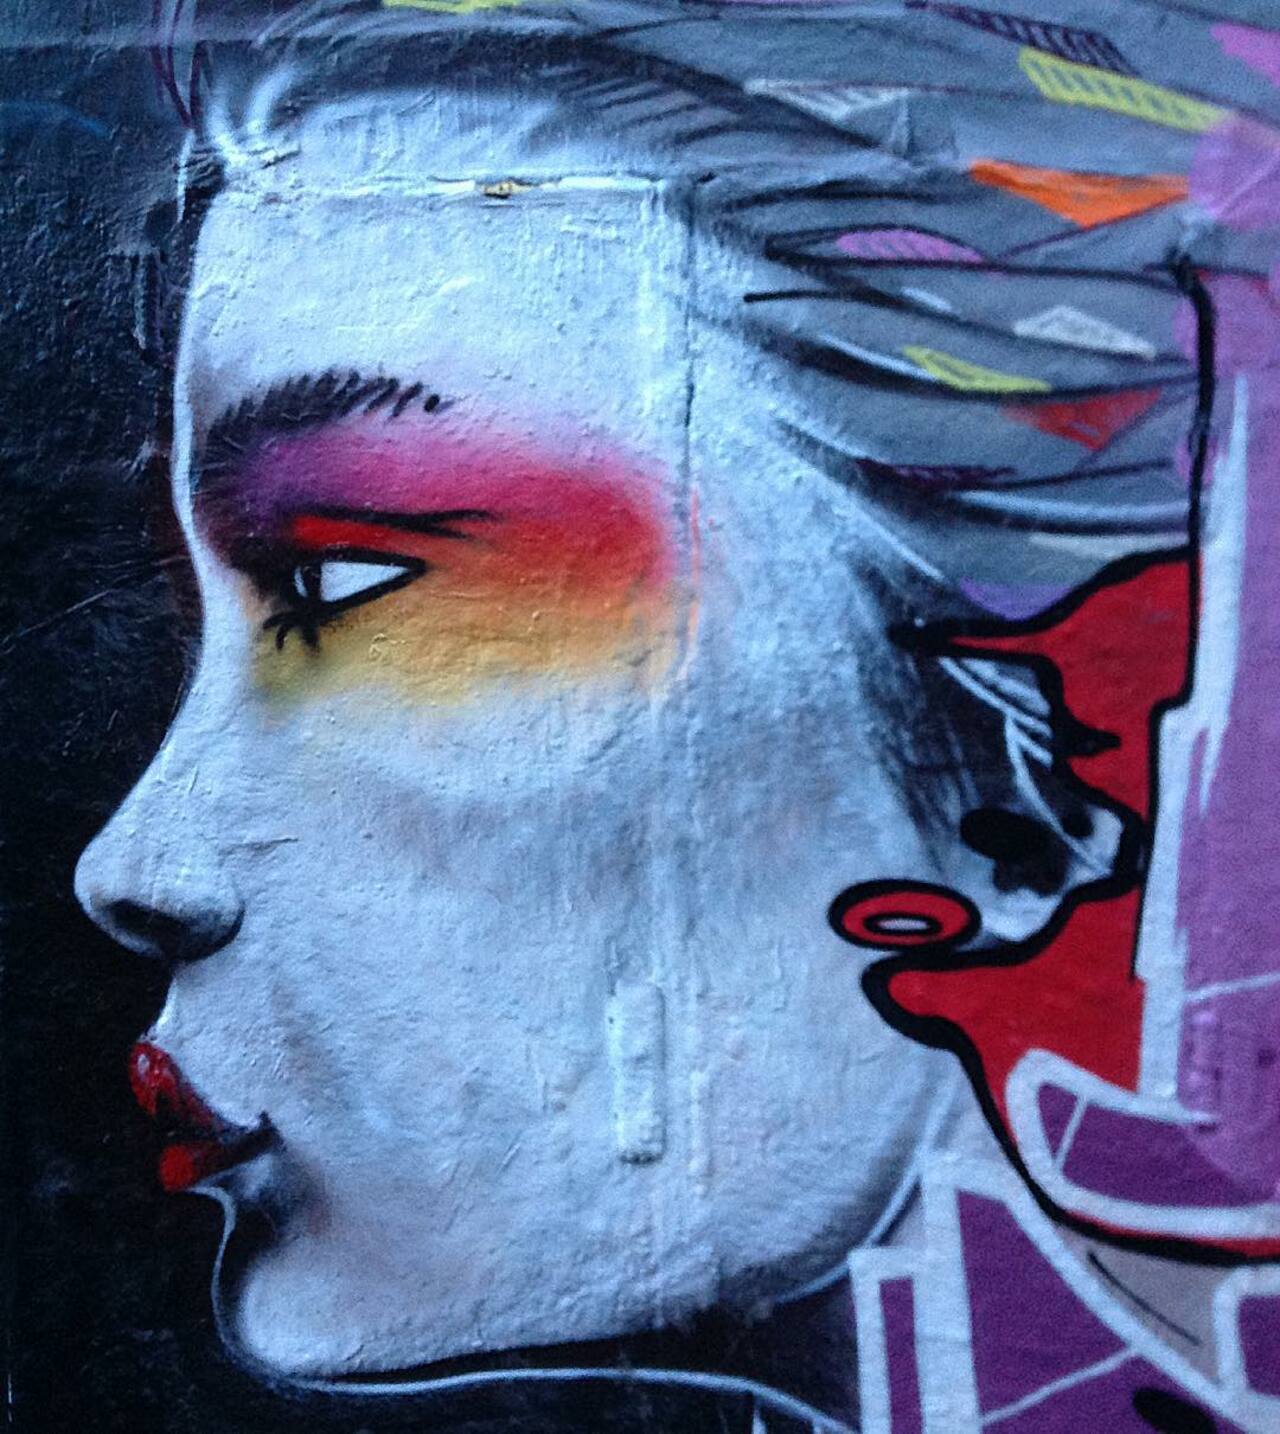 #Paris #graffiti photo by @stefetlinda http://ift.tt/1Lu4uGu #StreetArt https://t.co/3Z6ipyq35j